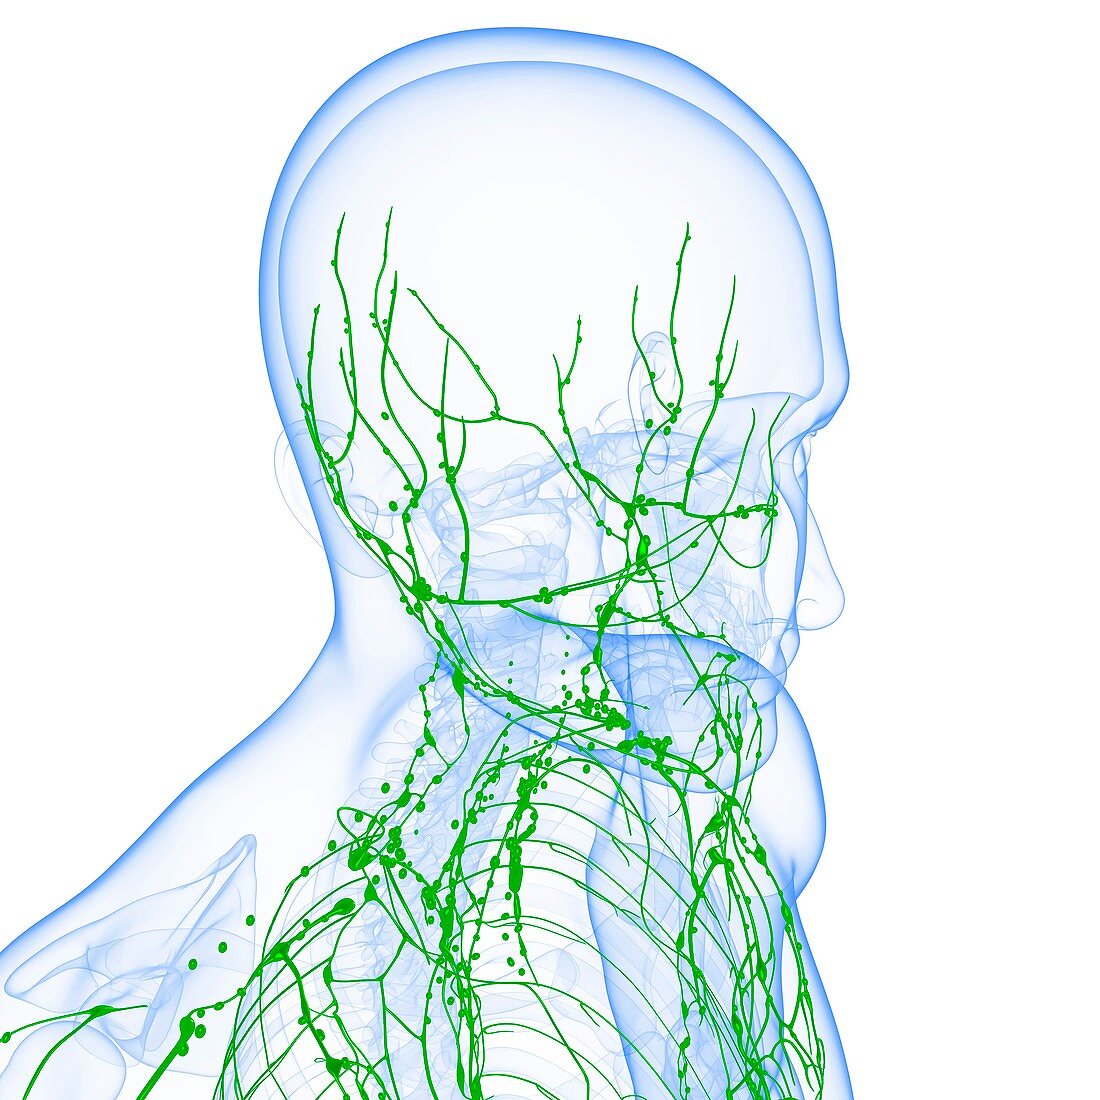 Male lymphatic system,artwork